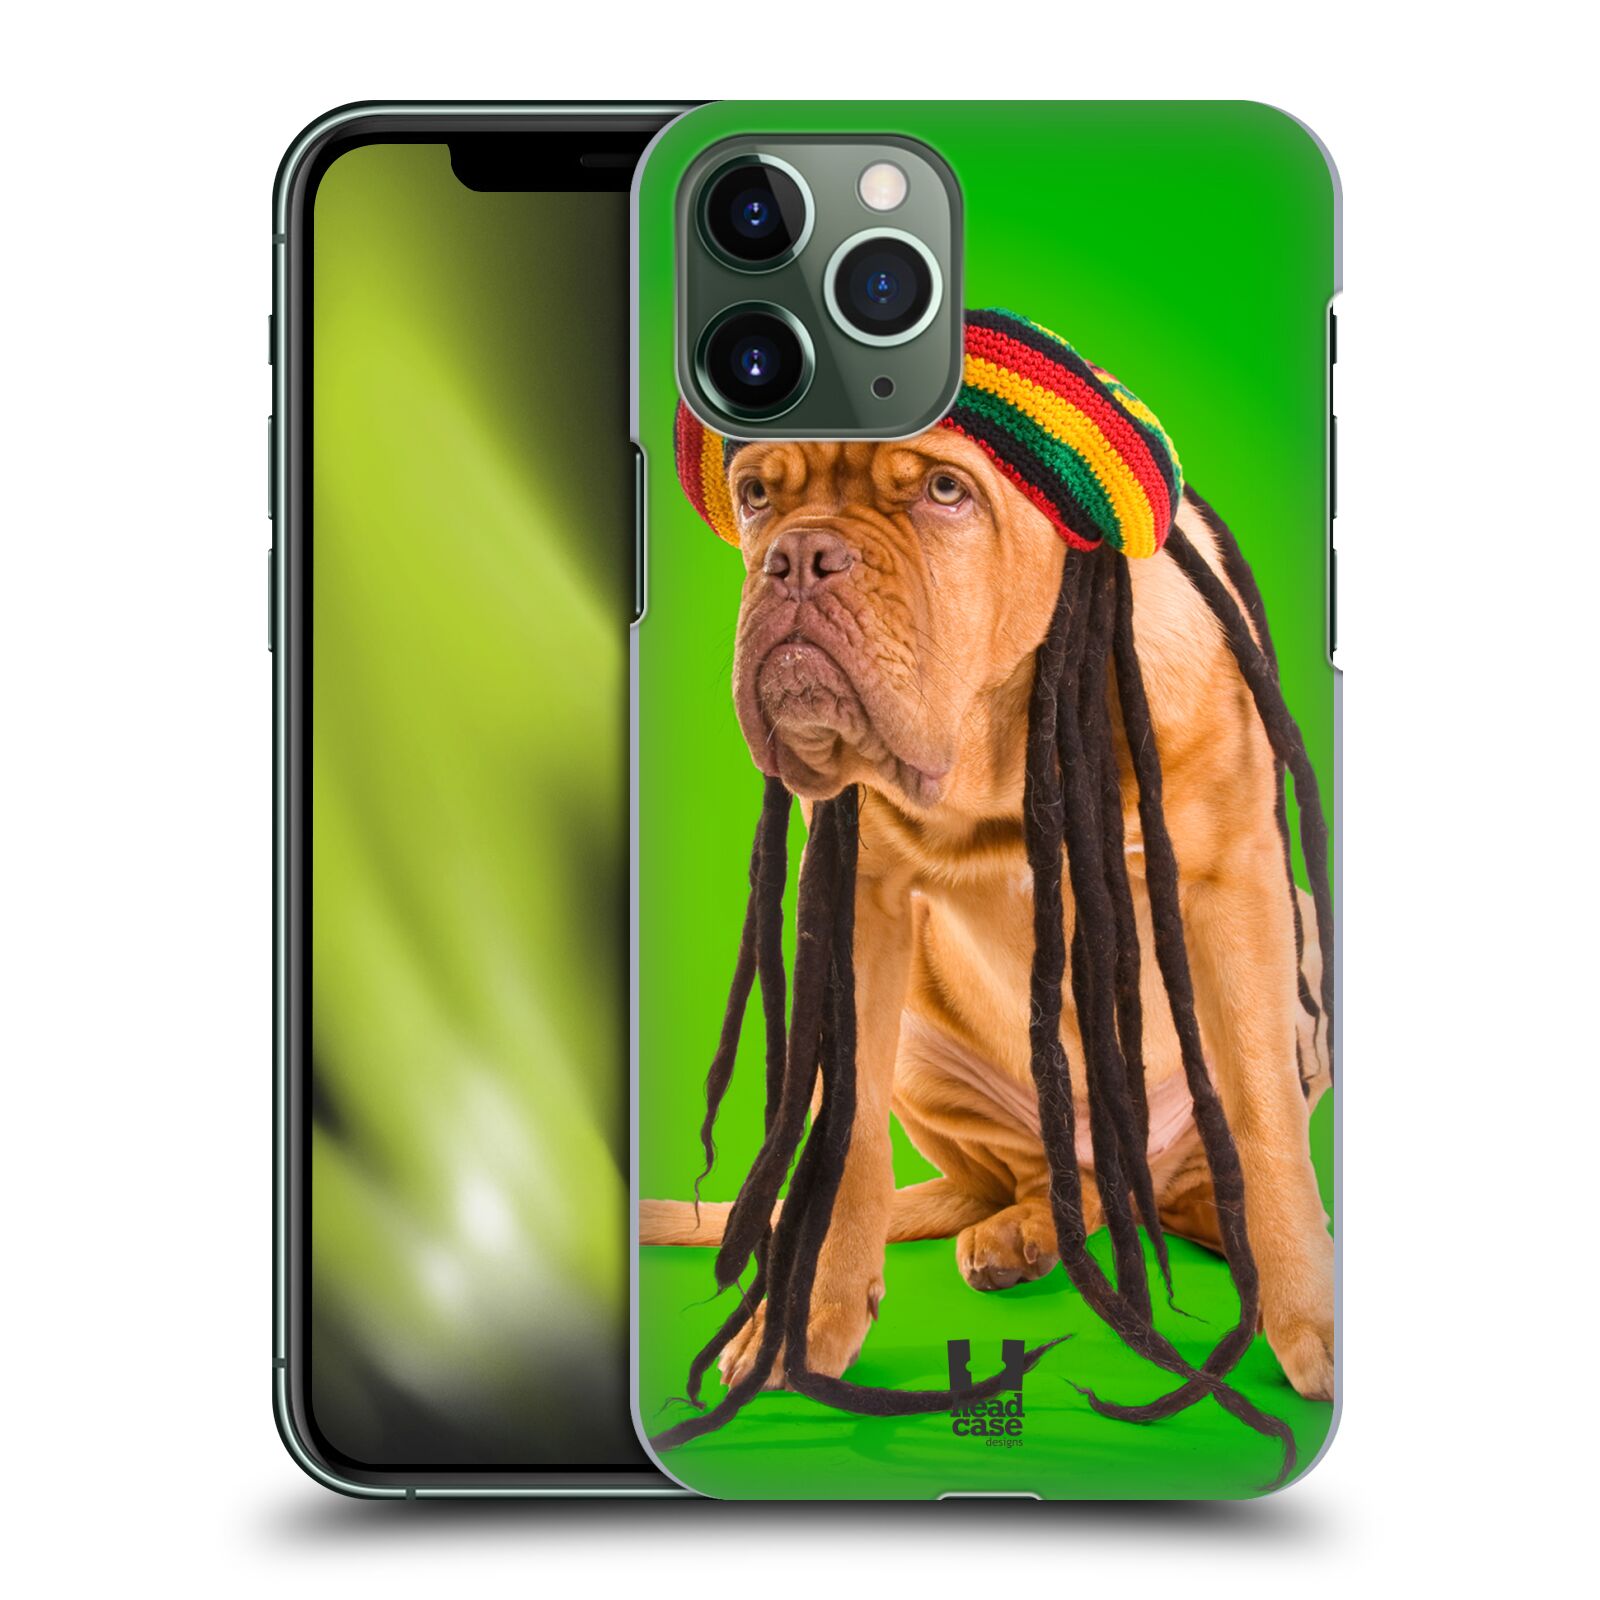 Pouzdro na mobil Apple Iphone 11 PRO - HEAD CASE - vzor Legrační zvířátka pejsek dredy Rastafarián